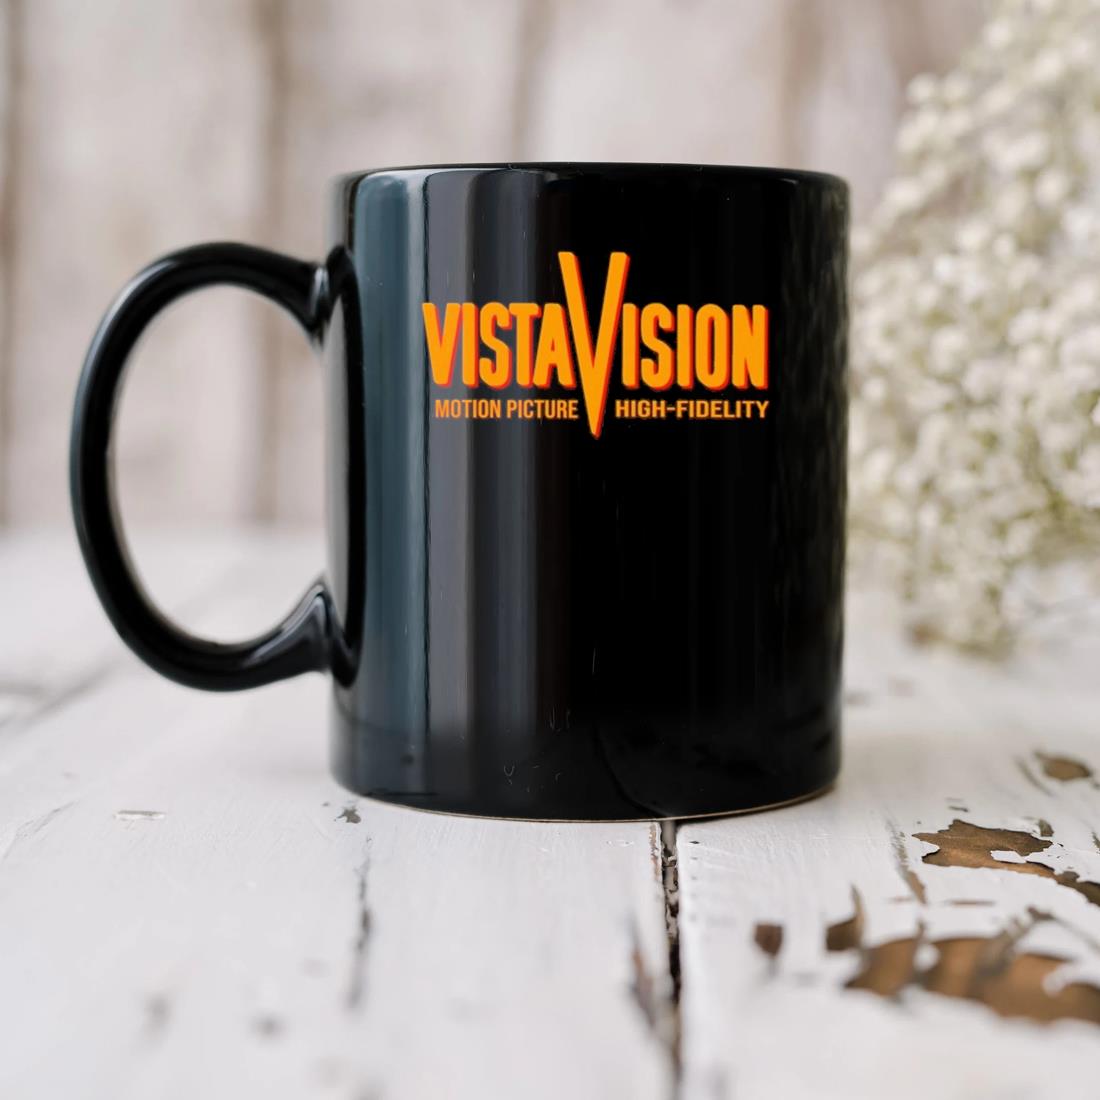 Vistavision Motion Picture High Fidelity Mug